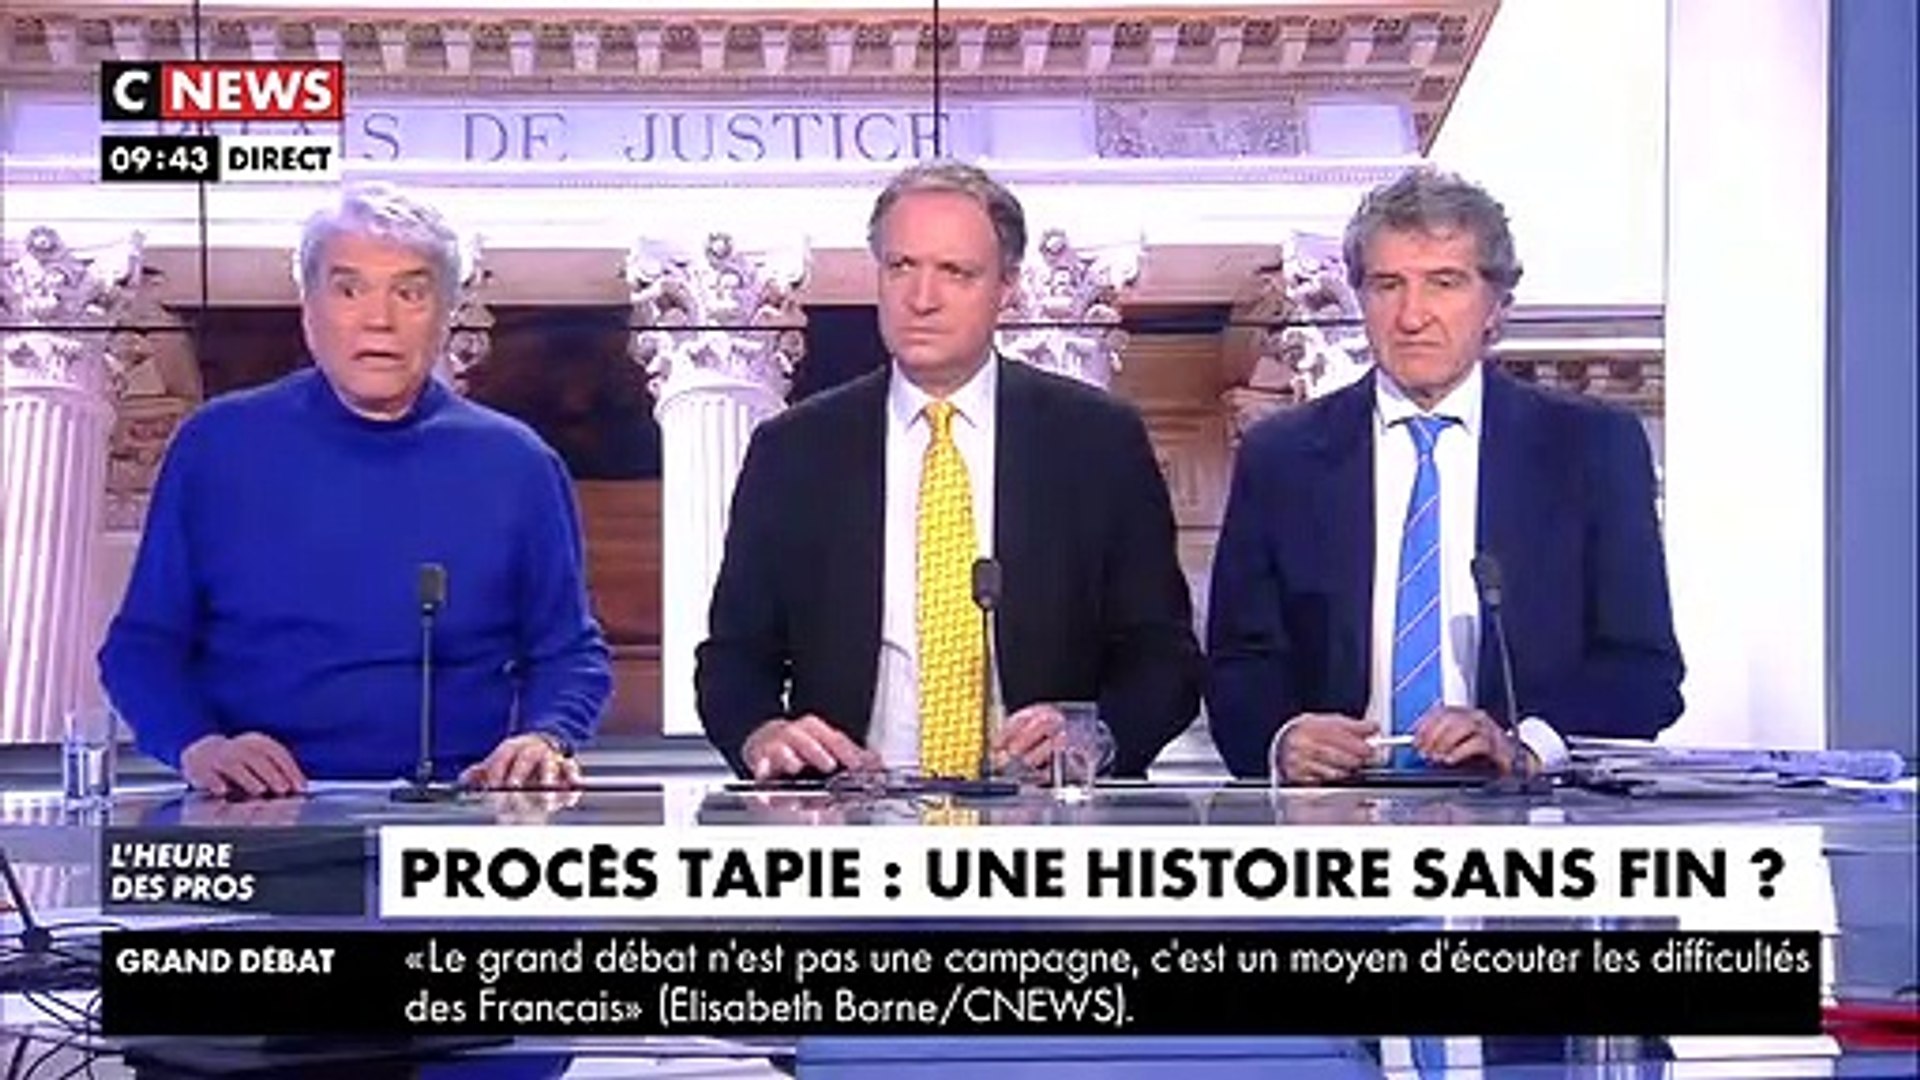 Tu nous les casses !" : Bernard Tapie enrage contre Robert Ménard sur CNews  - Vidéo Dailymotion